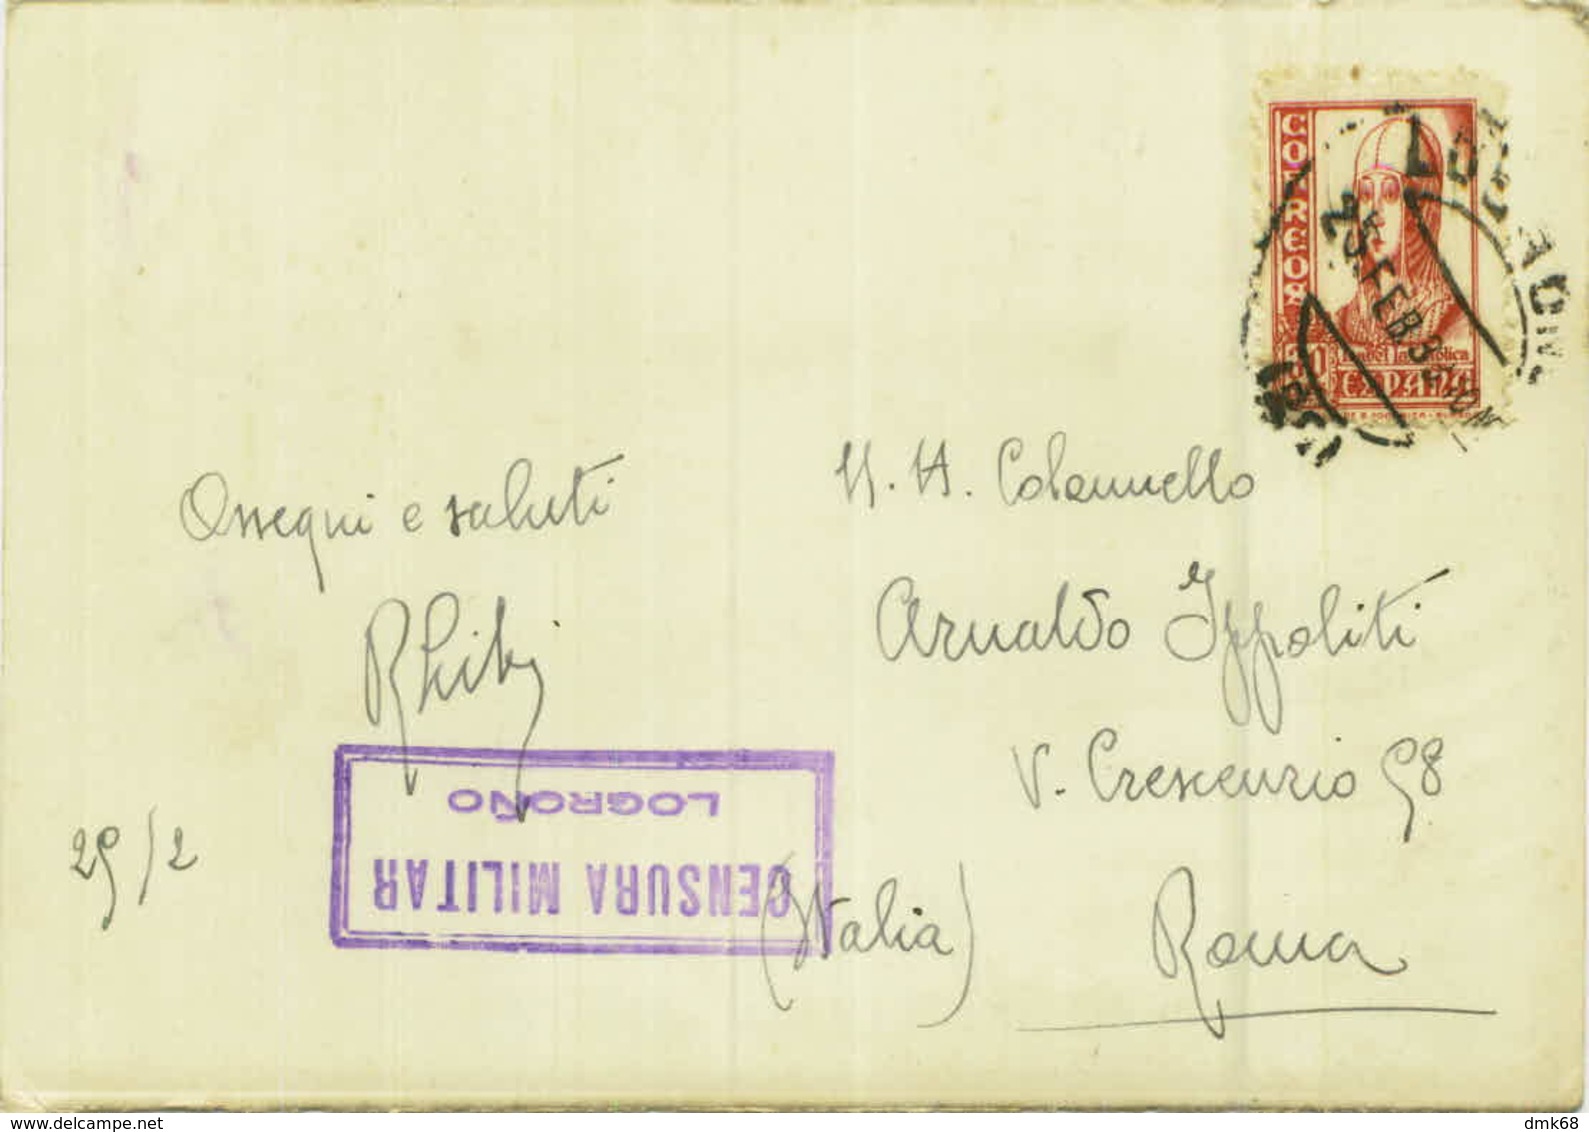 SPAIN - LOGRONO - INSITUTO Y JARDINES - CENSURA MILITAR LOGRONO - RPPC POSTCARD MAILED TO ITALY - 1930s ( 7120) - La Rioja (Logrono)